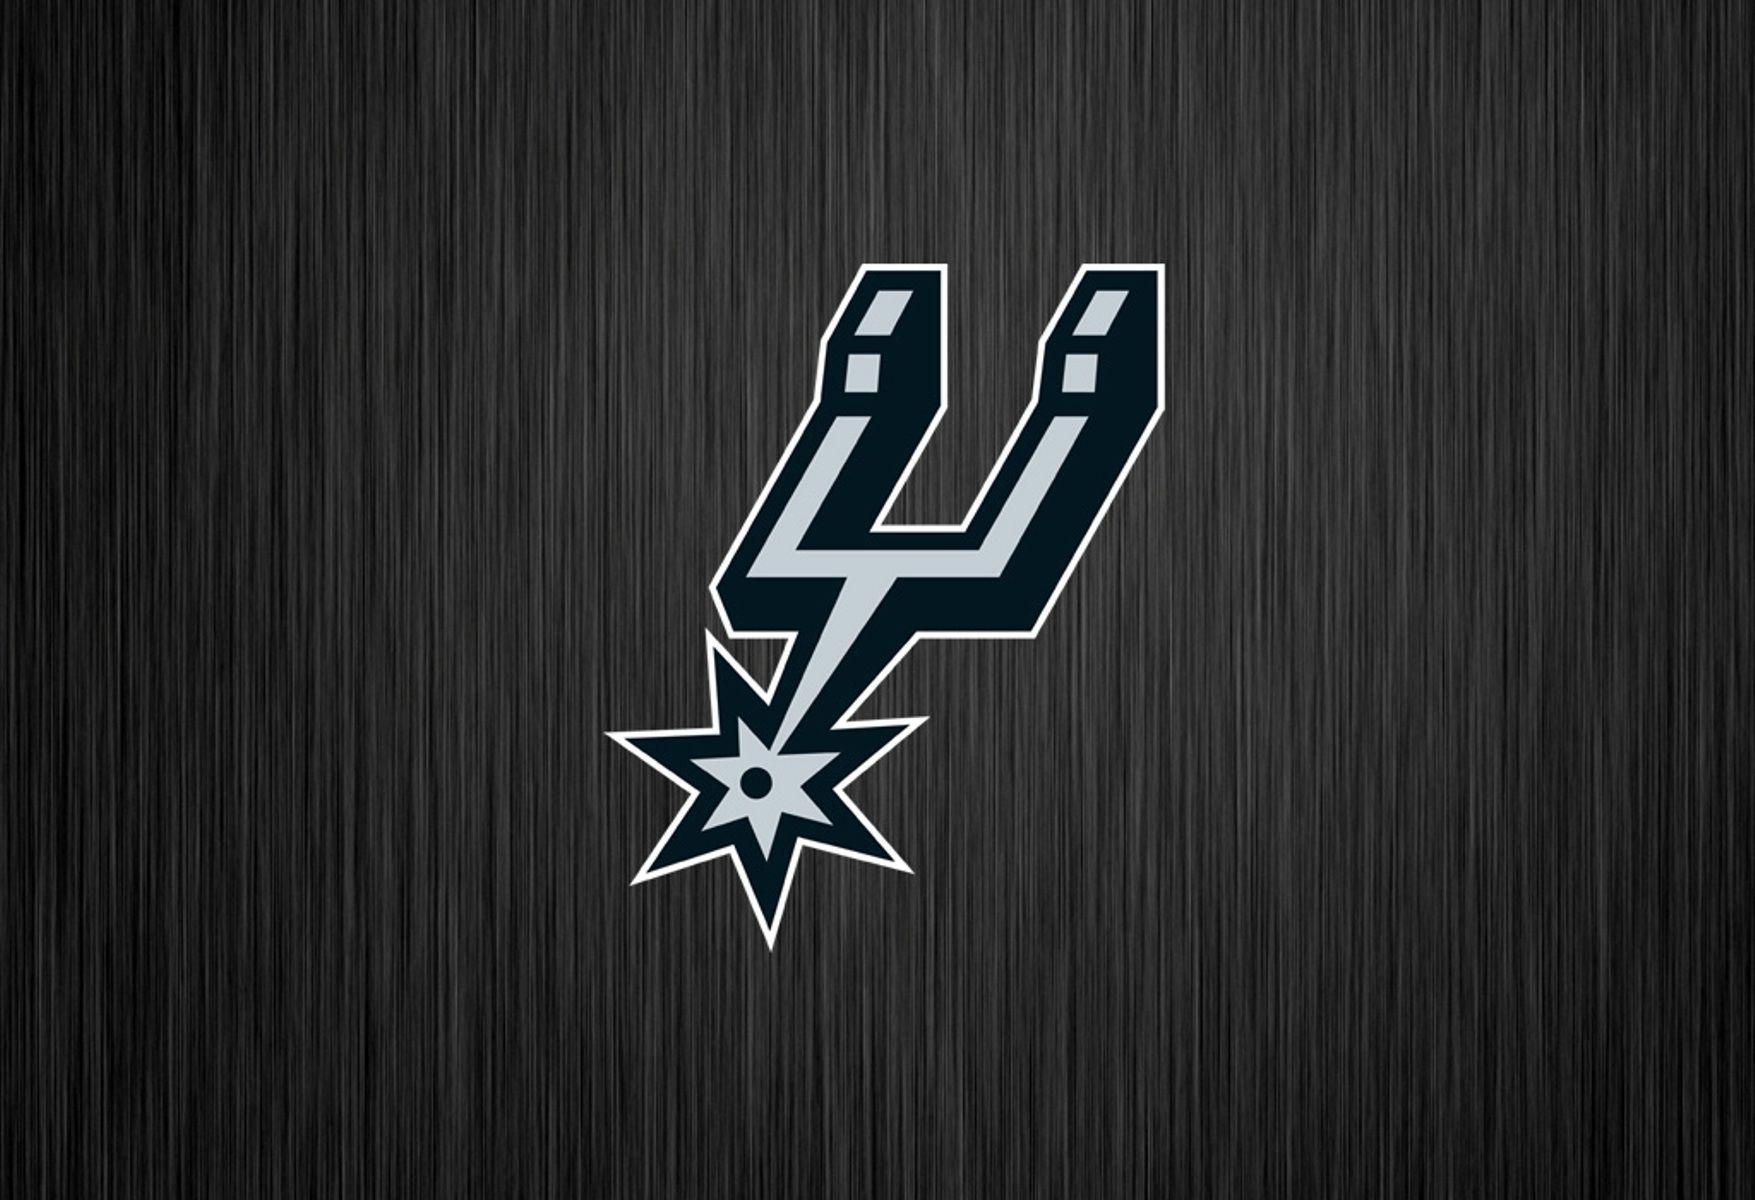 San Antonio Spurs Wallpaper 1080p Sport Wallpaper HD. San antonio spurs, Spurs, Spurs basketball